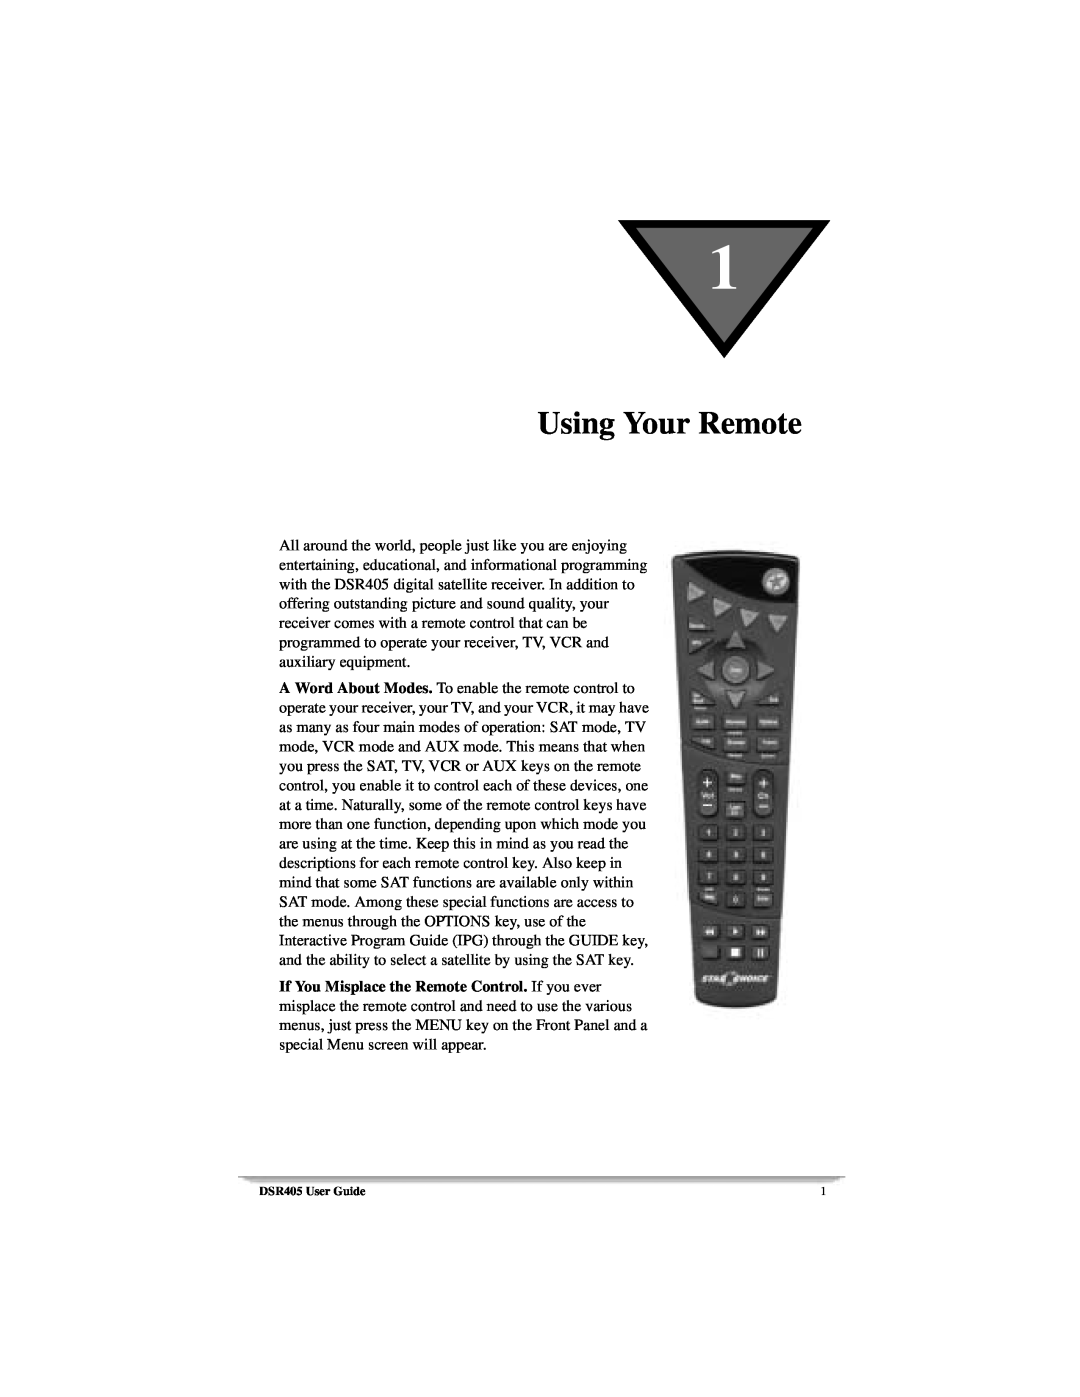 Motorola DSR405 manual Using Your Remote 